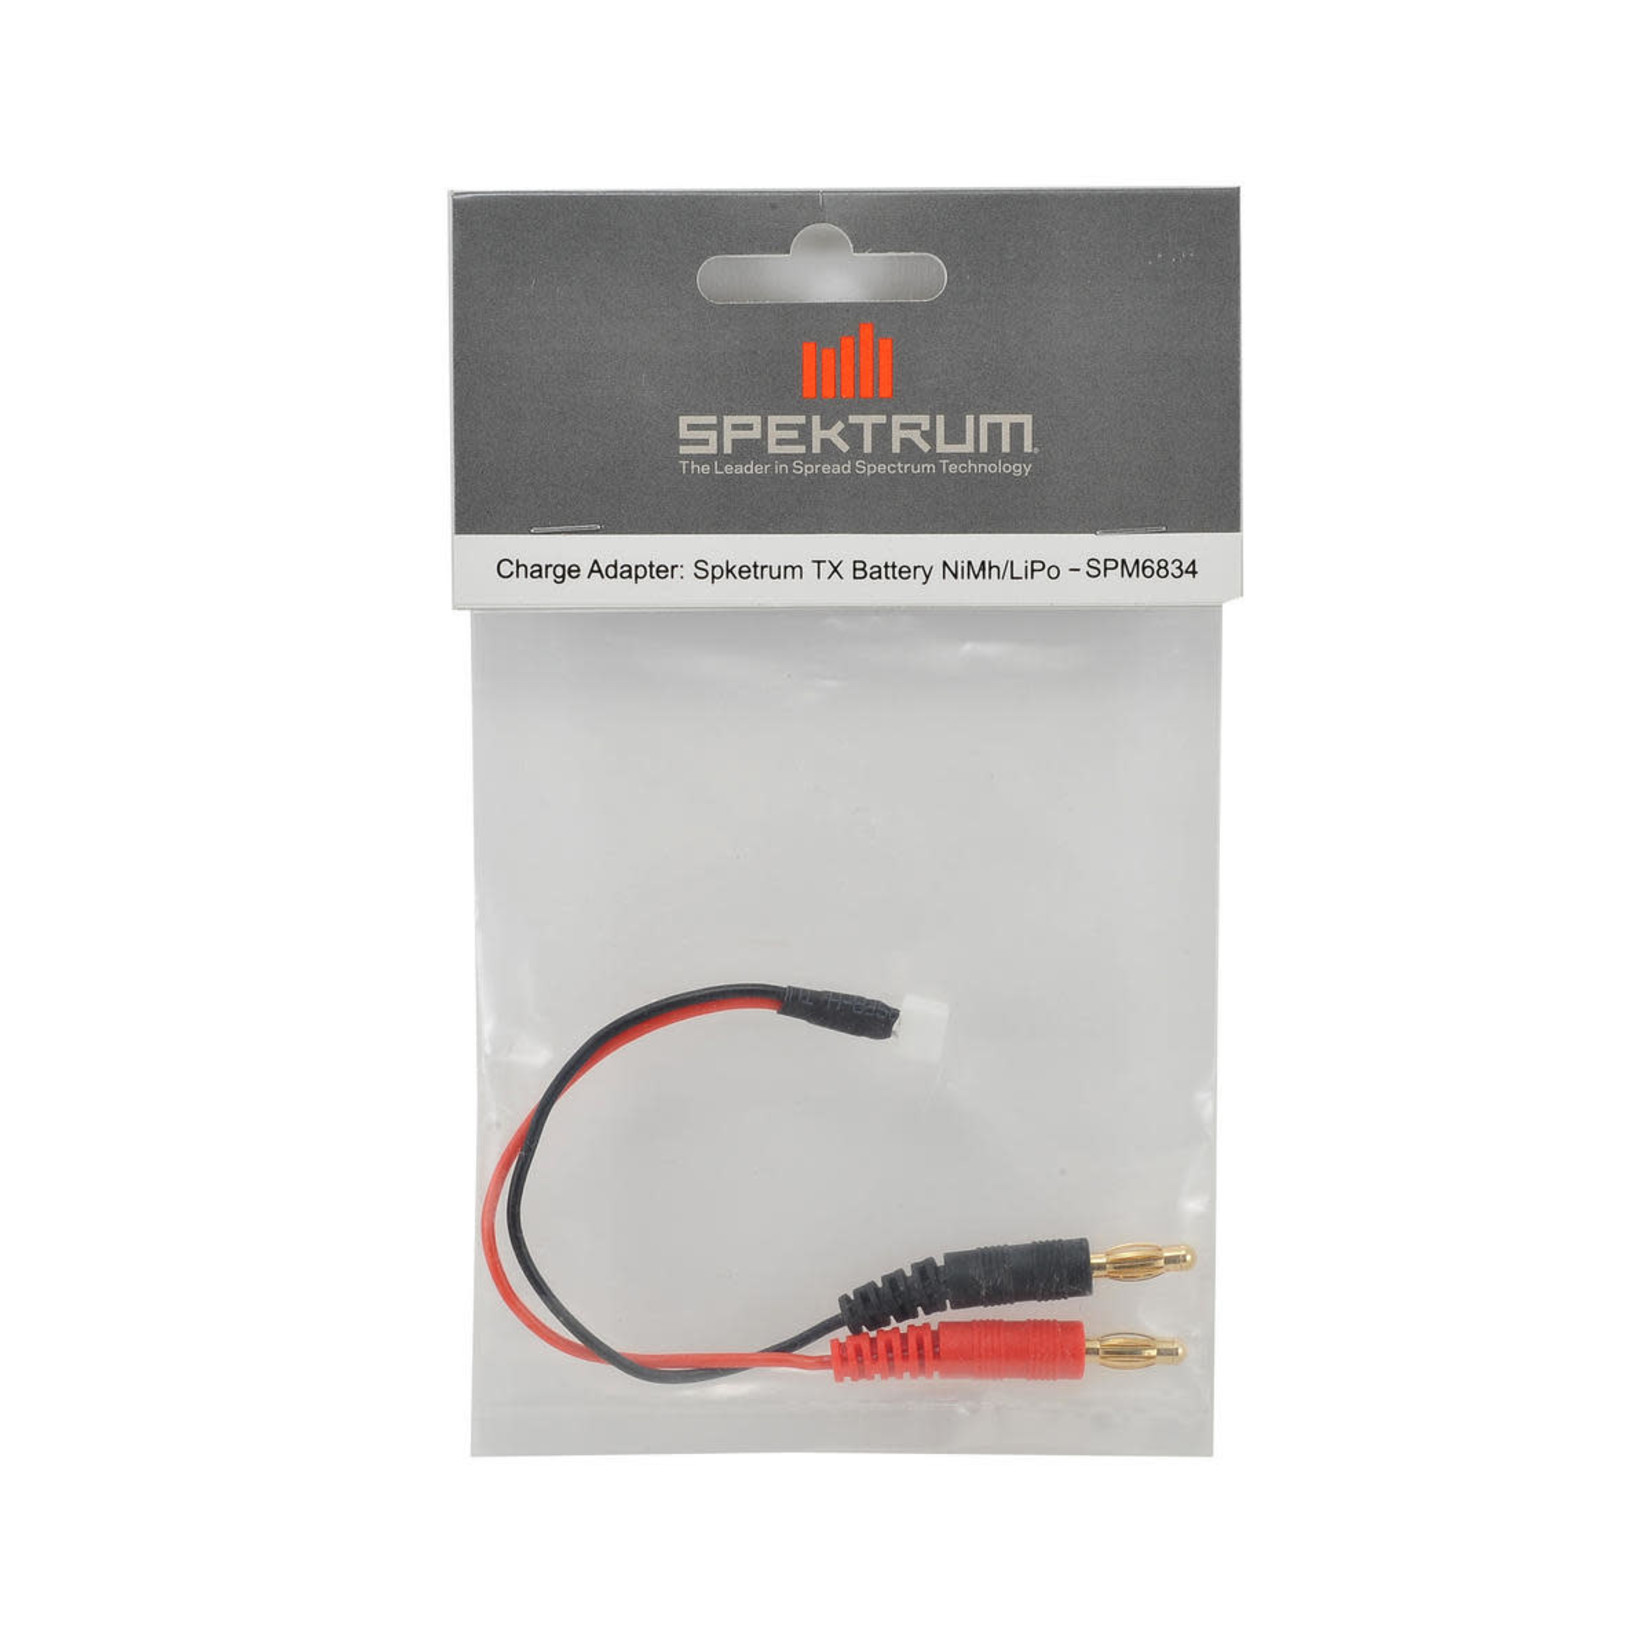 Spektrum Spektrum RC Transmitter Battery Charge Adapter (DX Series) #SPM6834